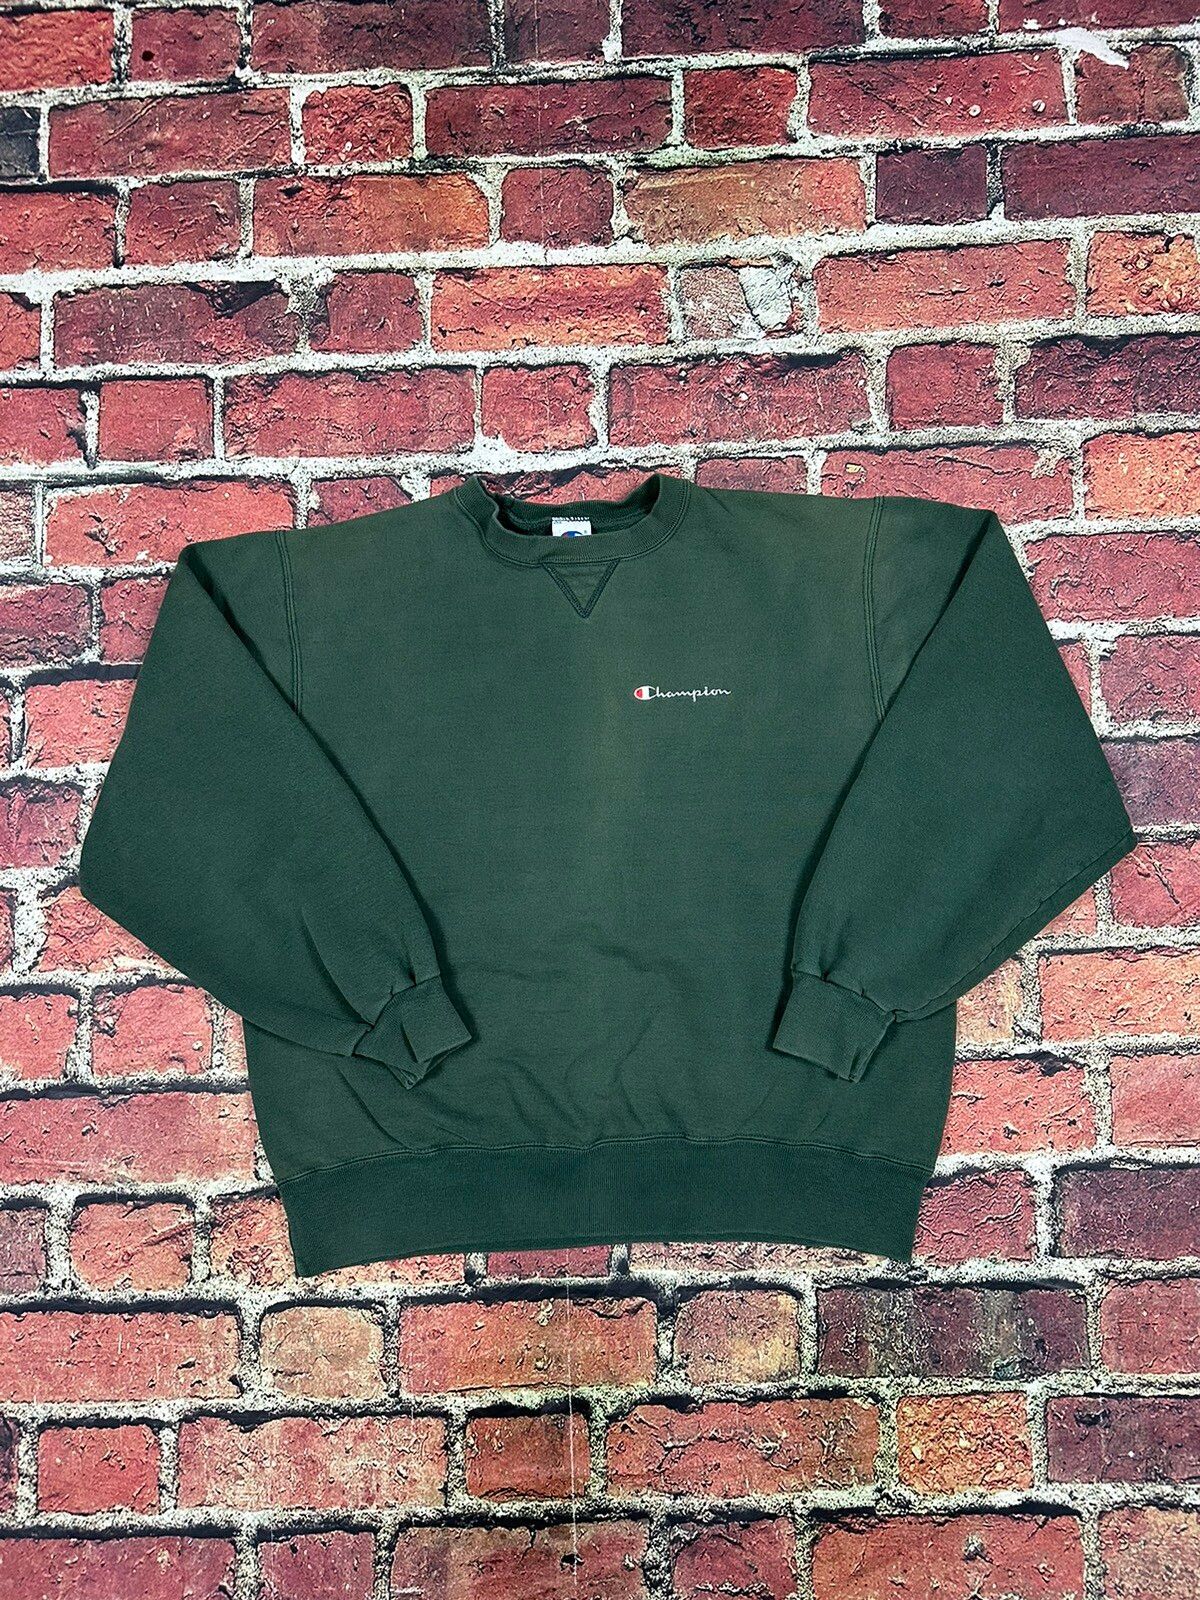 Vintage Vintage 90s Champion Sweatshirt Green Spell Out Crewneck Size US XL / EU 56 / 4 - 1 Preview